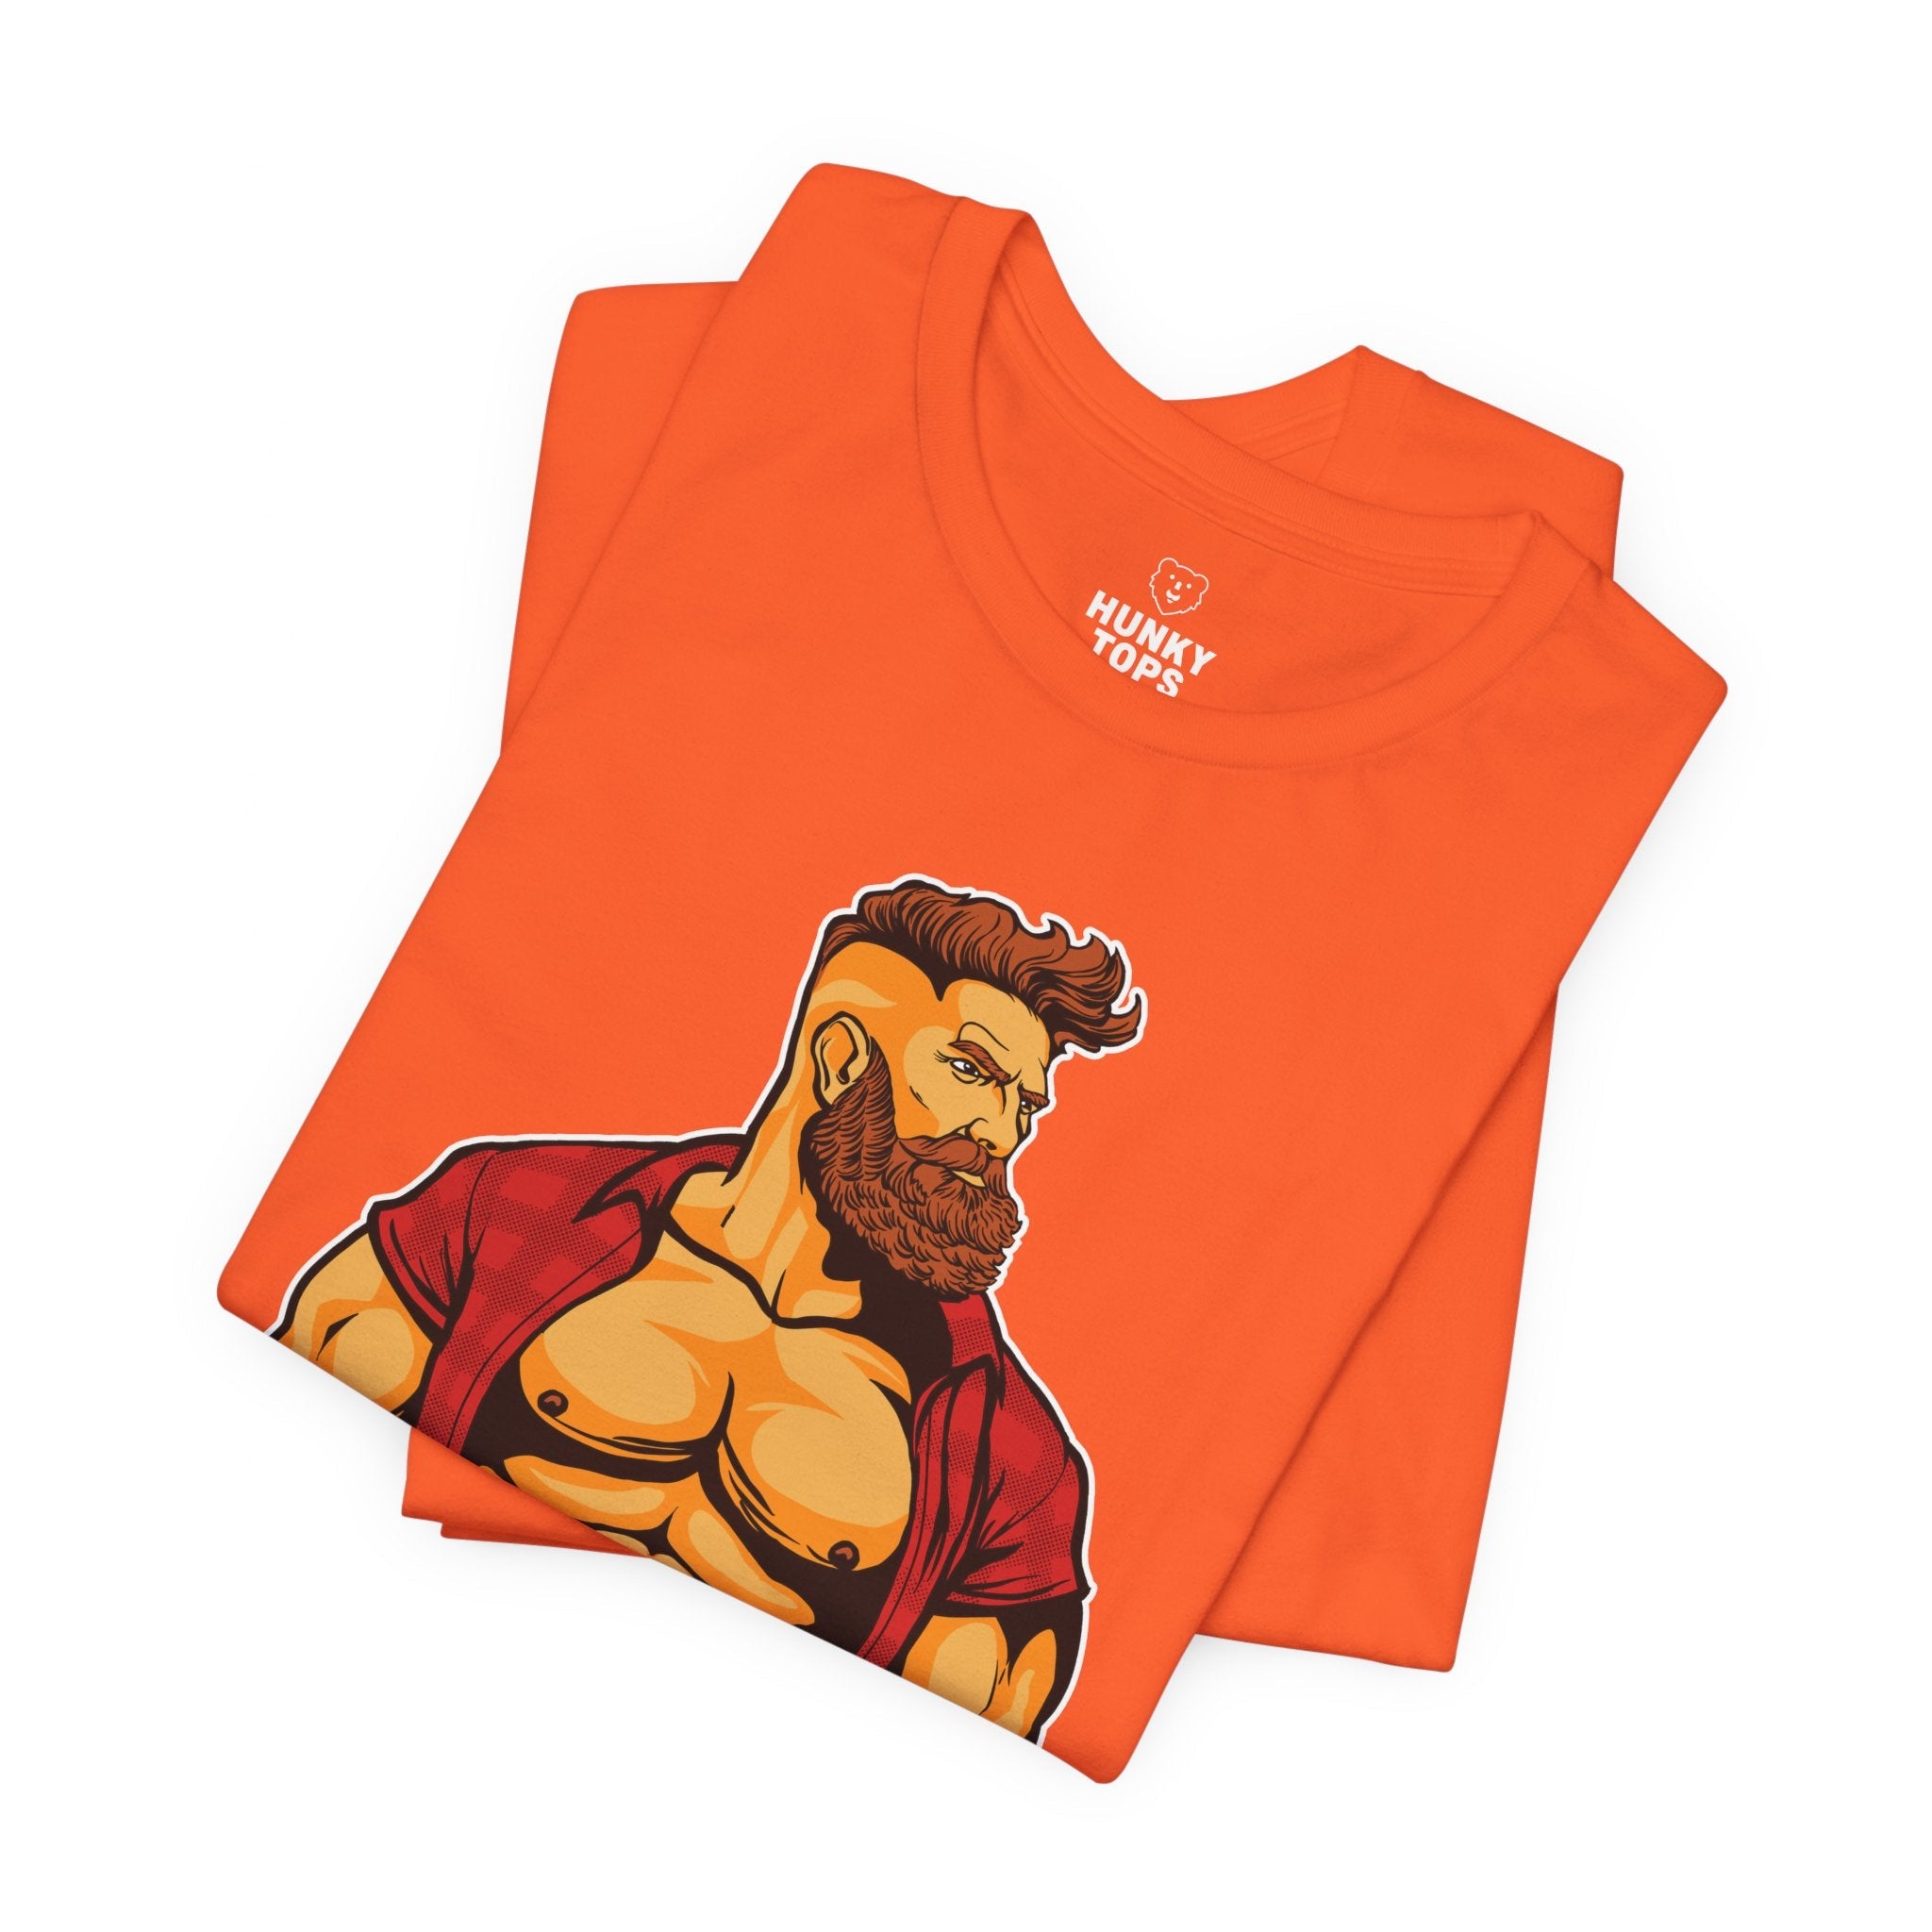 Stay Brawny T-Shirt - Hunky Tops#color_orange